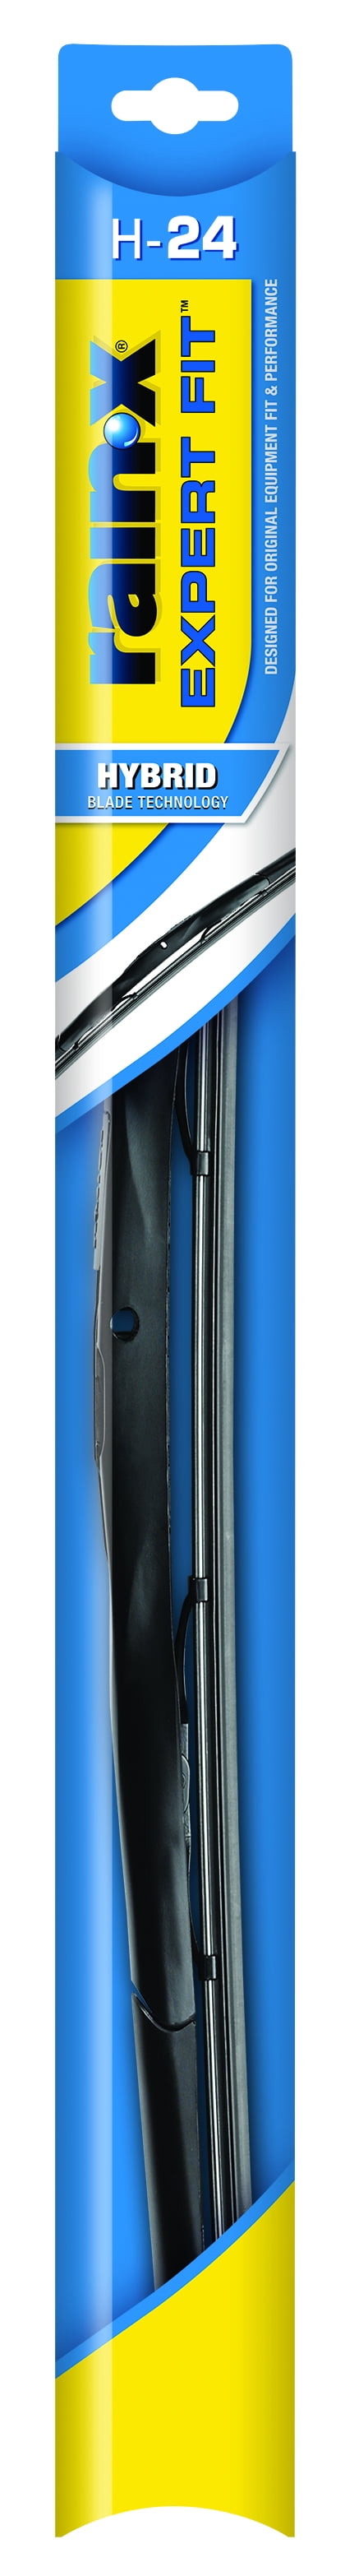 Rain-X Expert Fit Hybrid Windshield Wiper Blade 24" Replacement H24